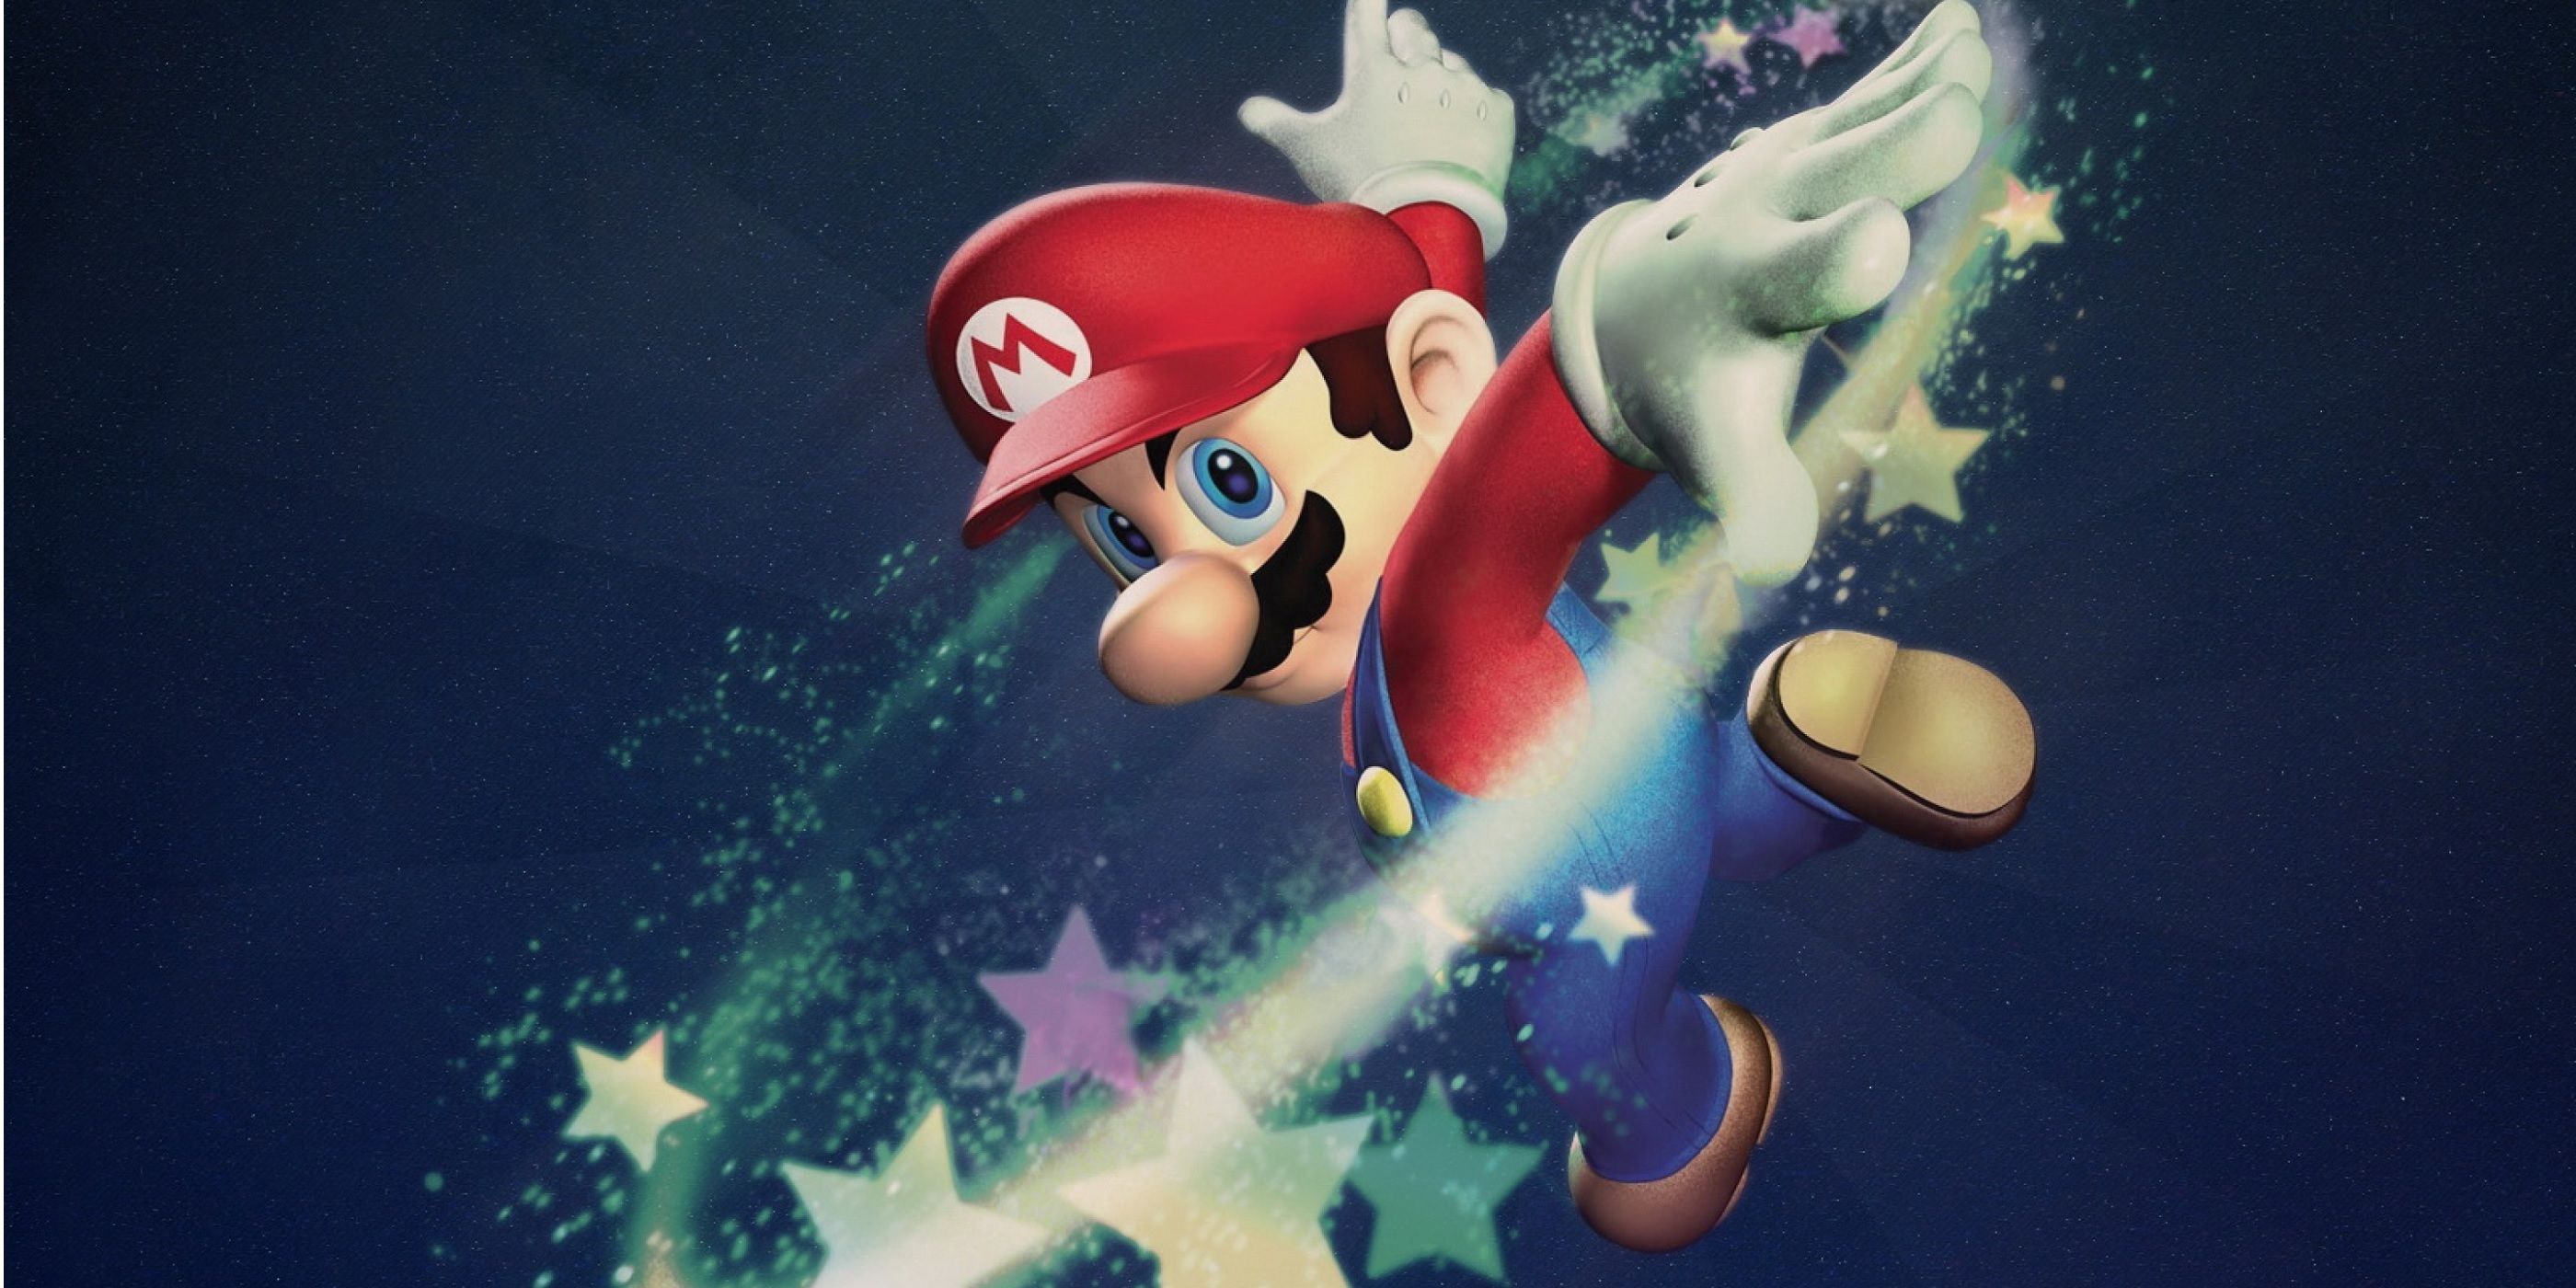 A screenshot of Super Mario Galaxy 2 for the Nintendo Wii.